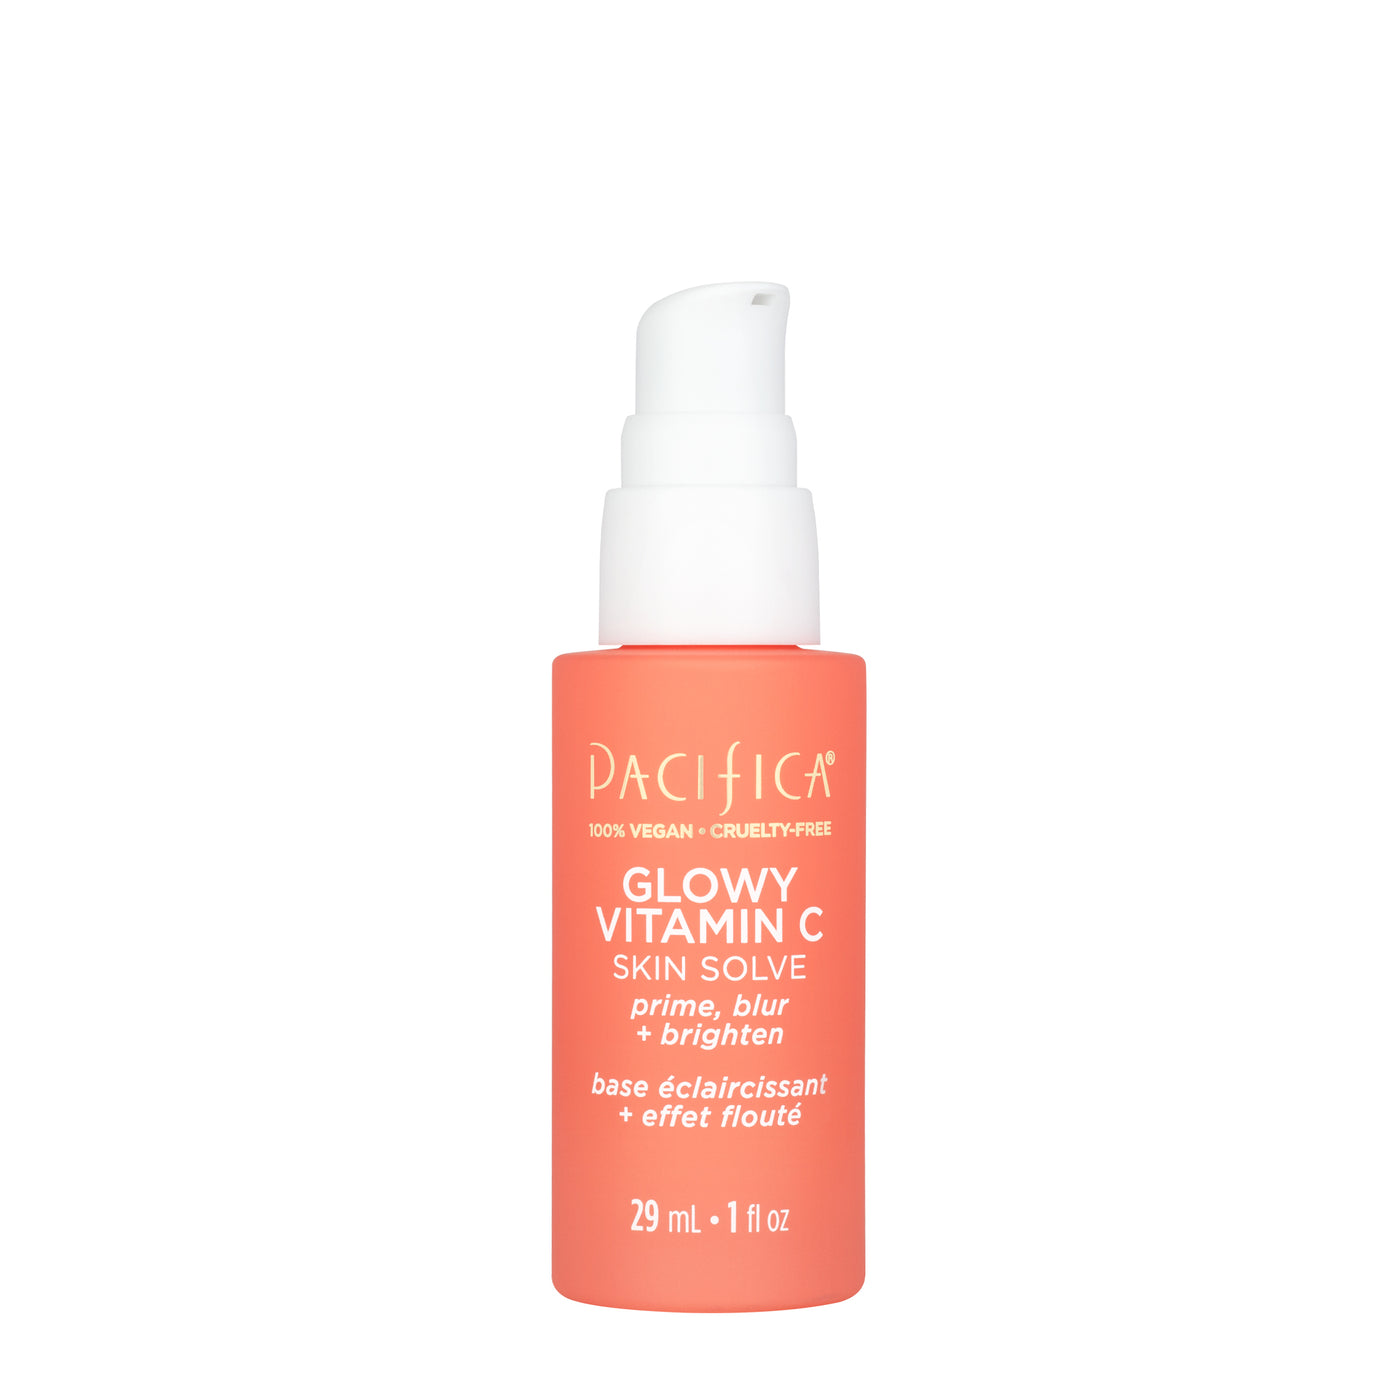 Glowy Vitamin C Skin Solve - Makeup - Pacifica Beauty